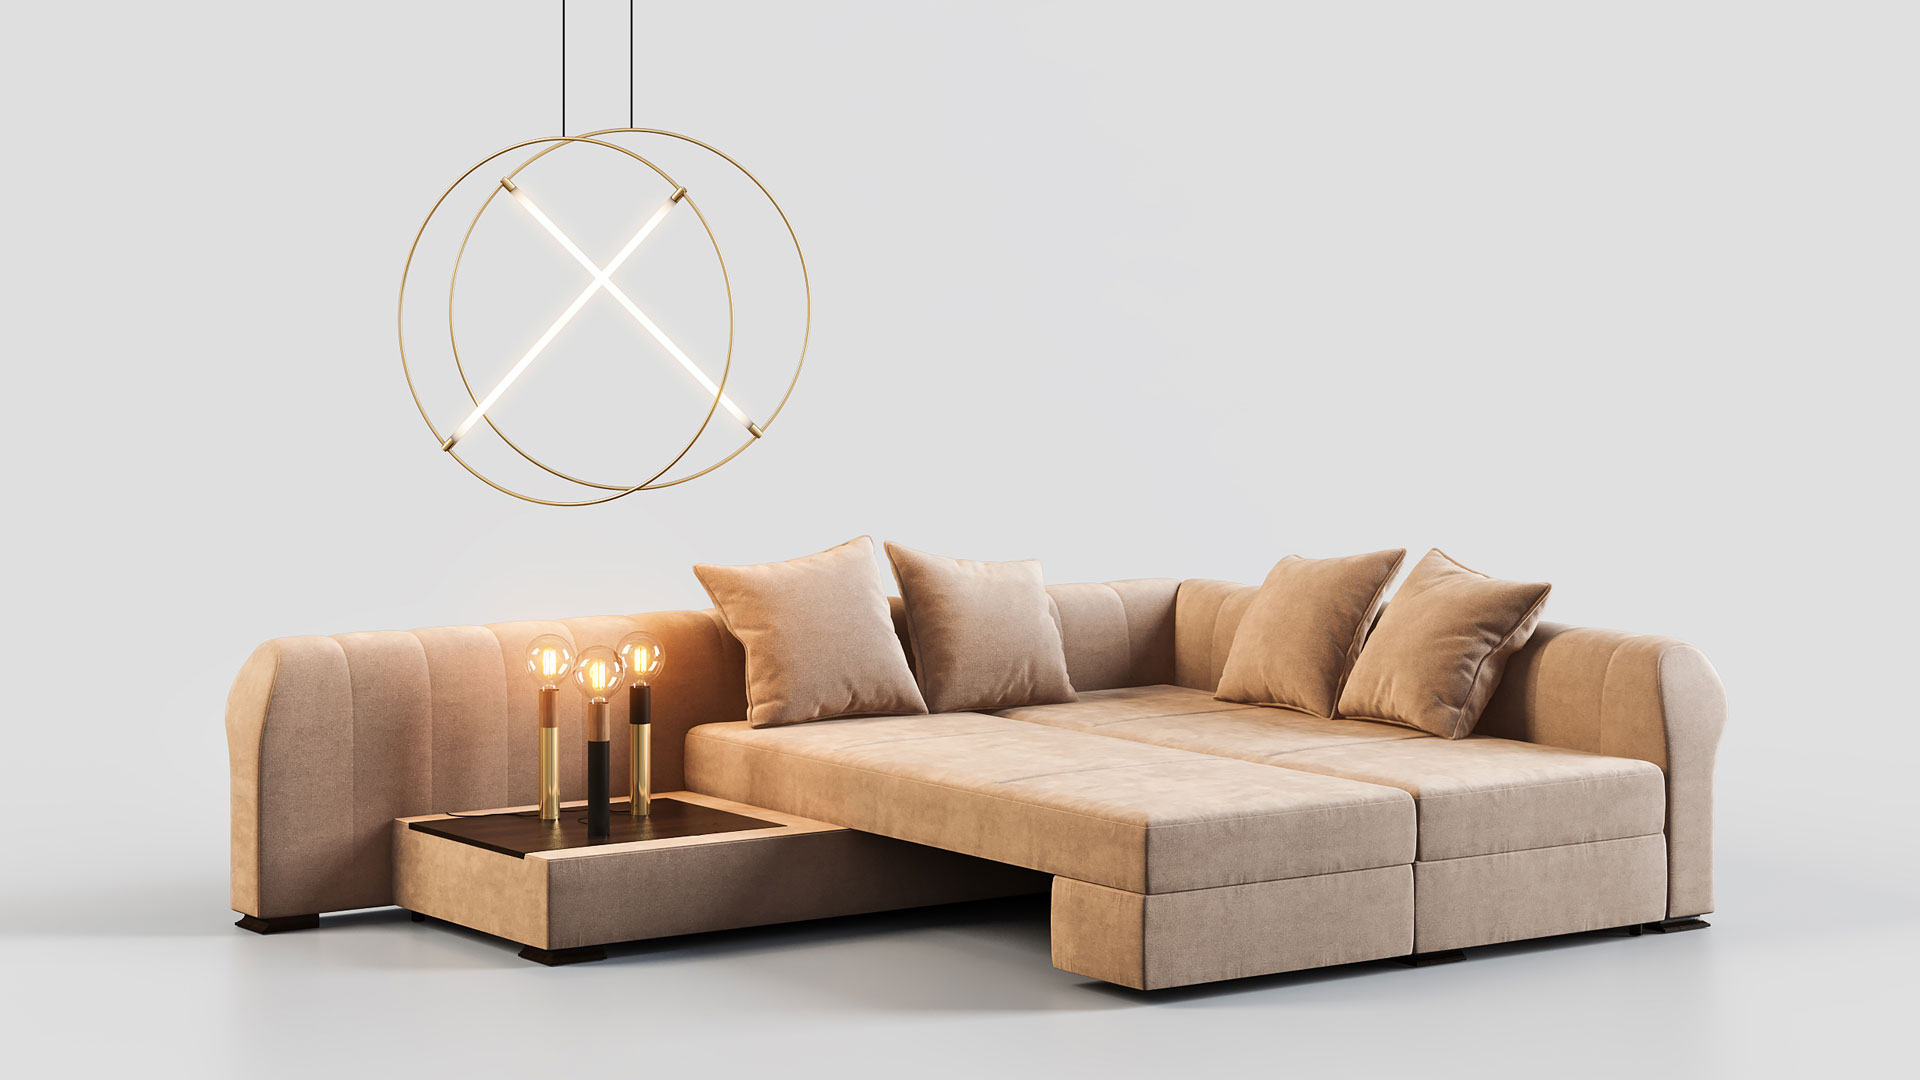 Furniture Renders: 5 Reasons They Look Hyper Realistic